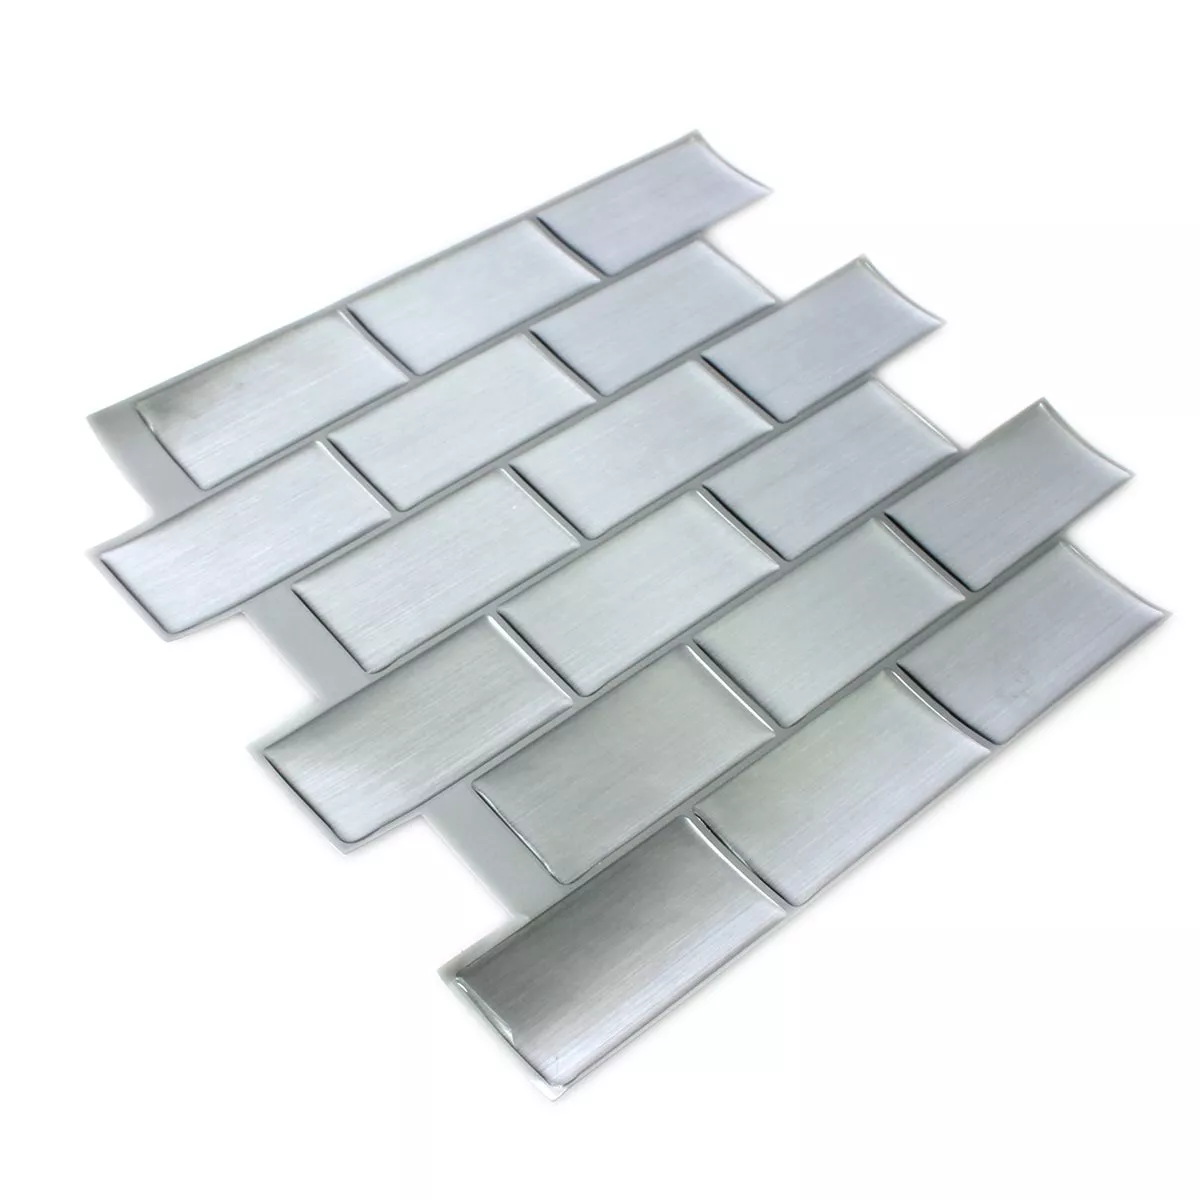 Sample Mosaic Tiles Vinyl Stainless Steel Optic Silver